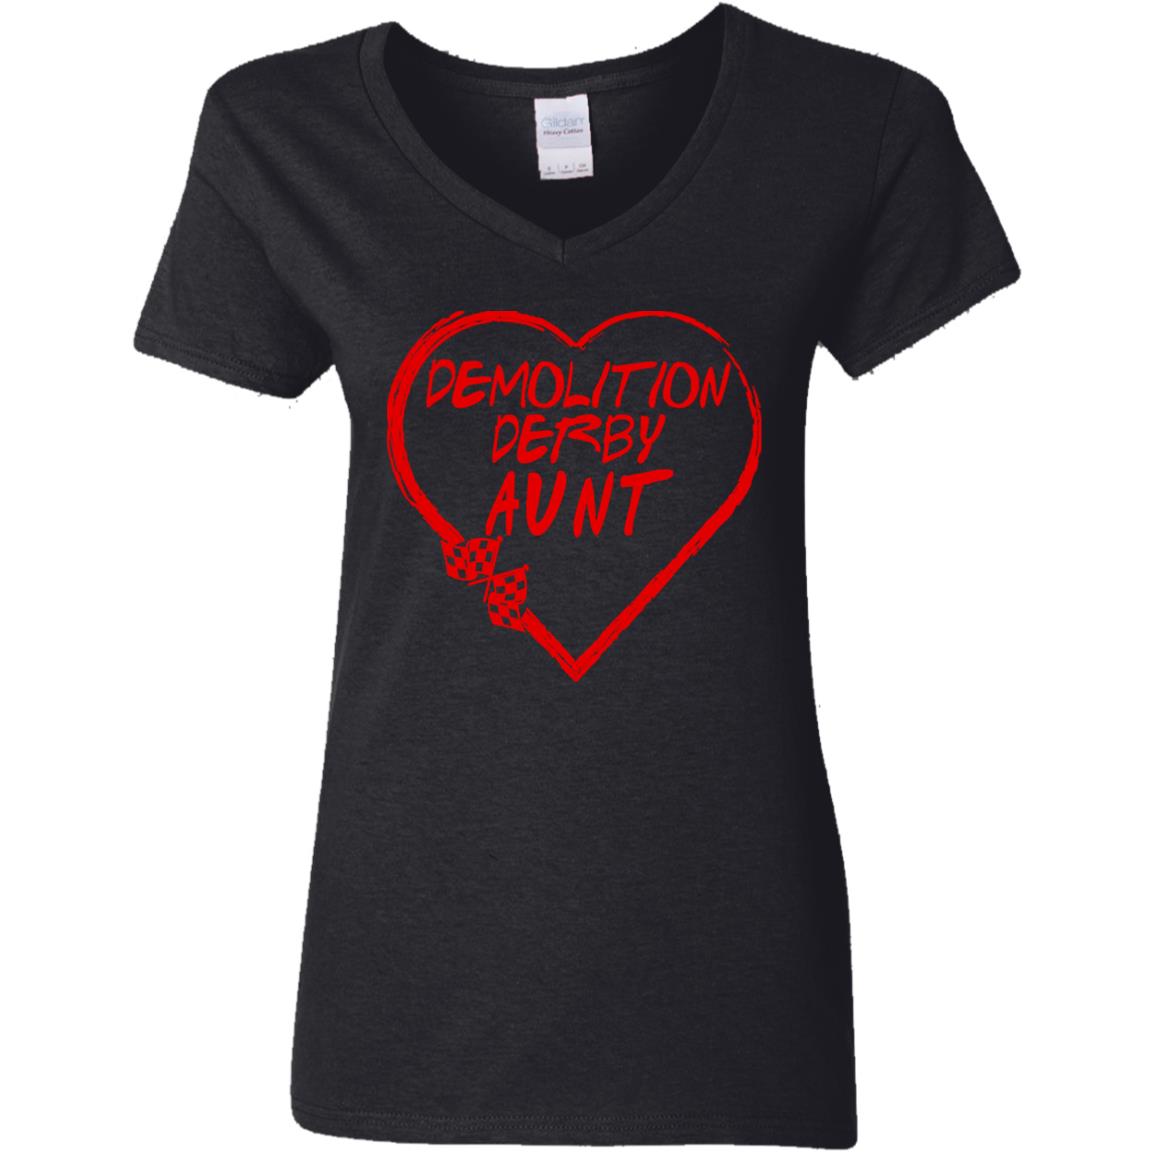 Demolition Derby Aunt Heart Ladies' 5.3 oz. V-Neck T-Shirt